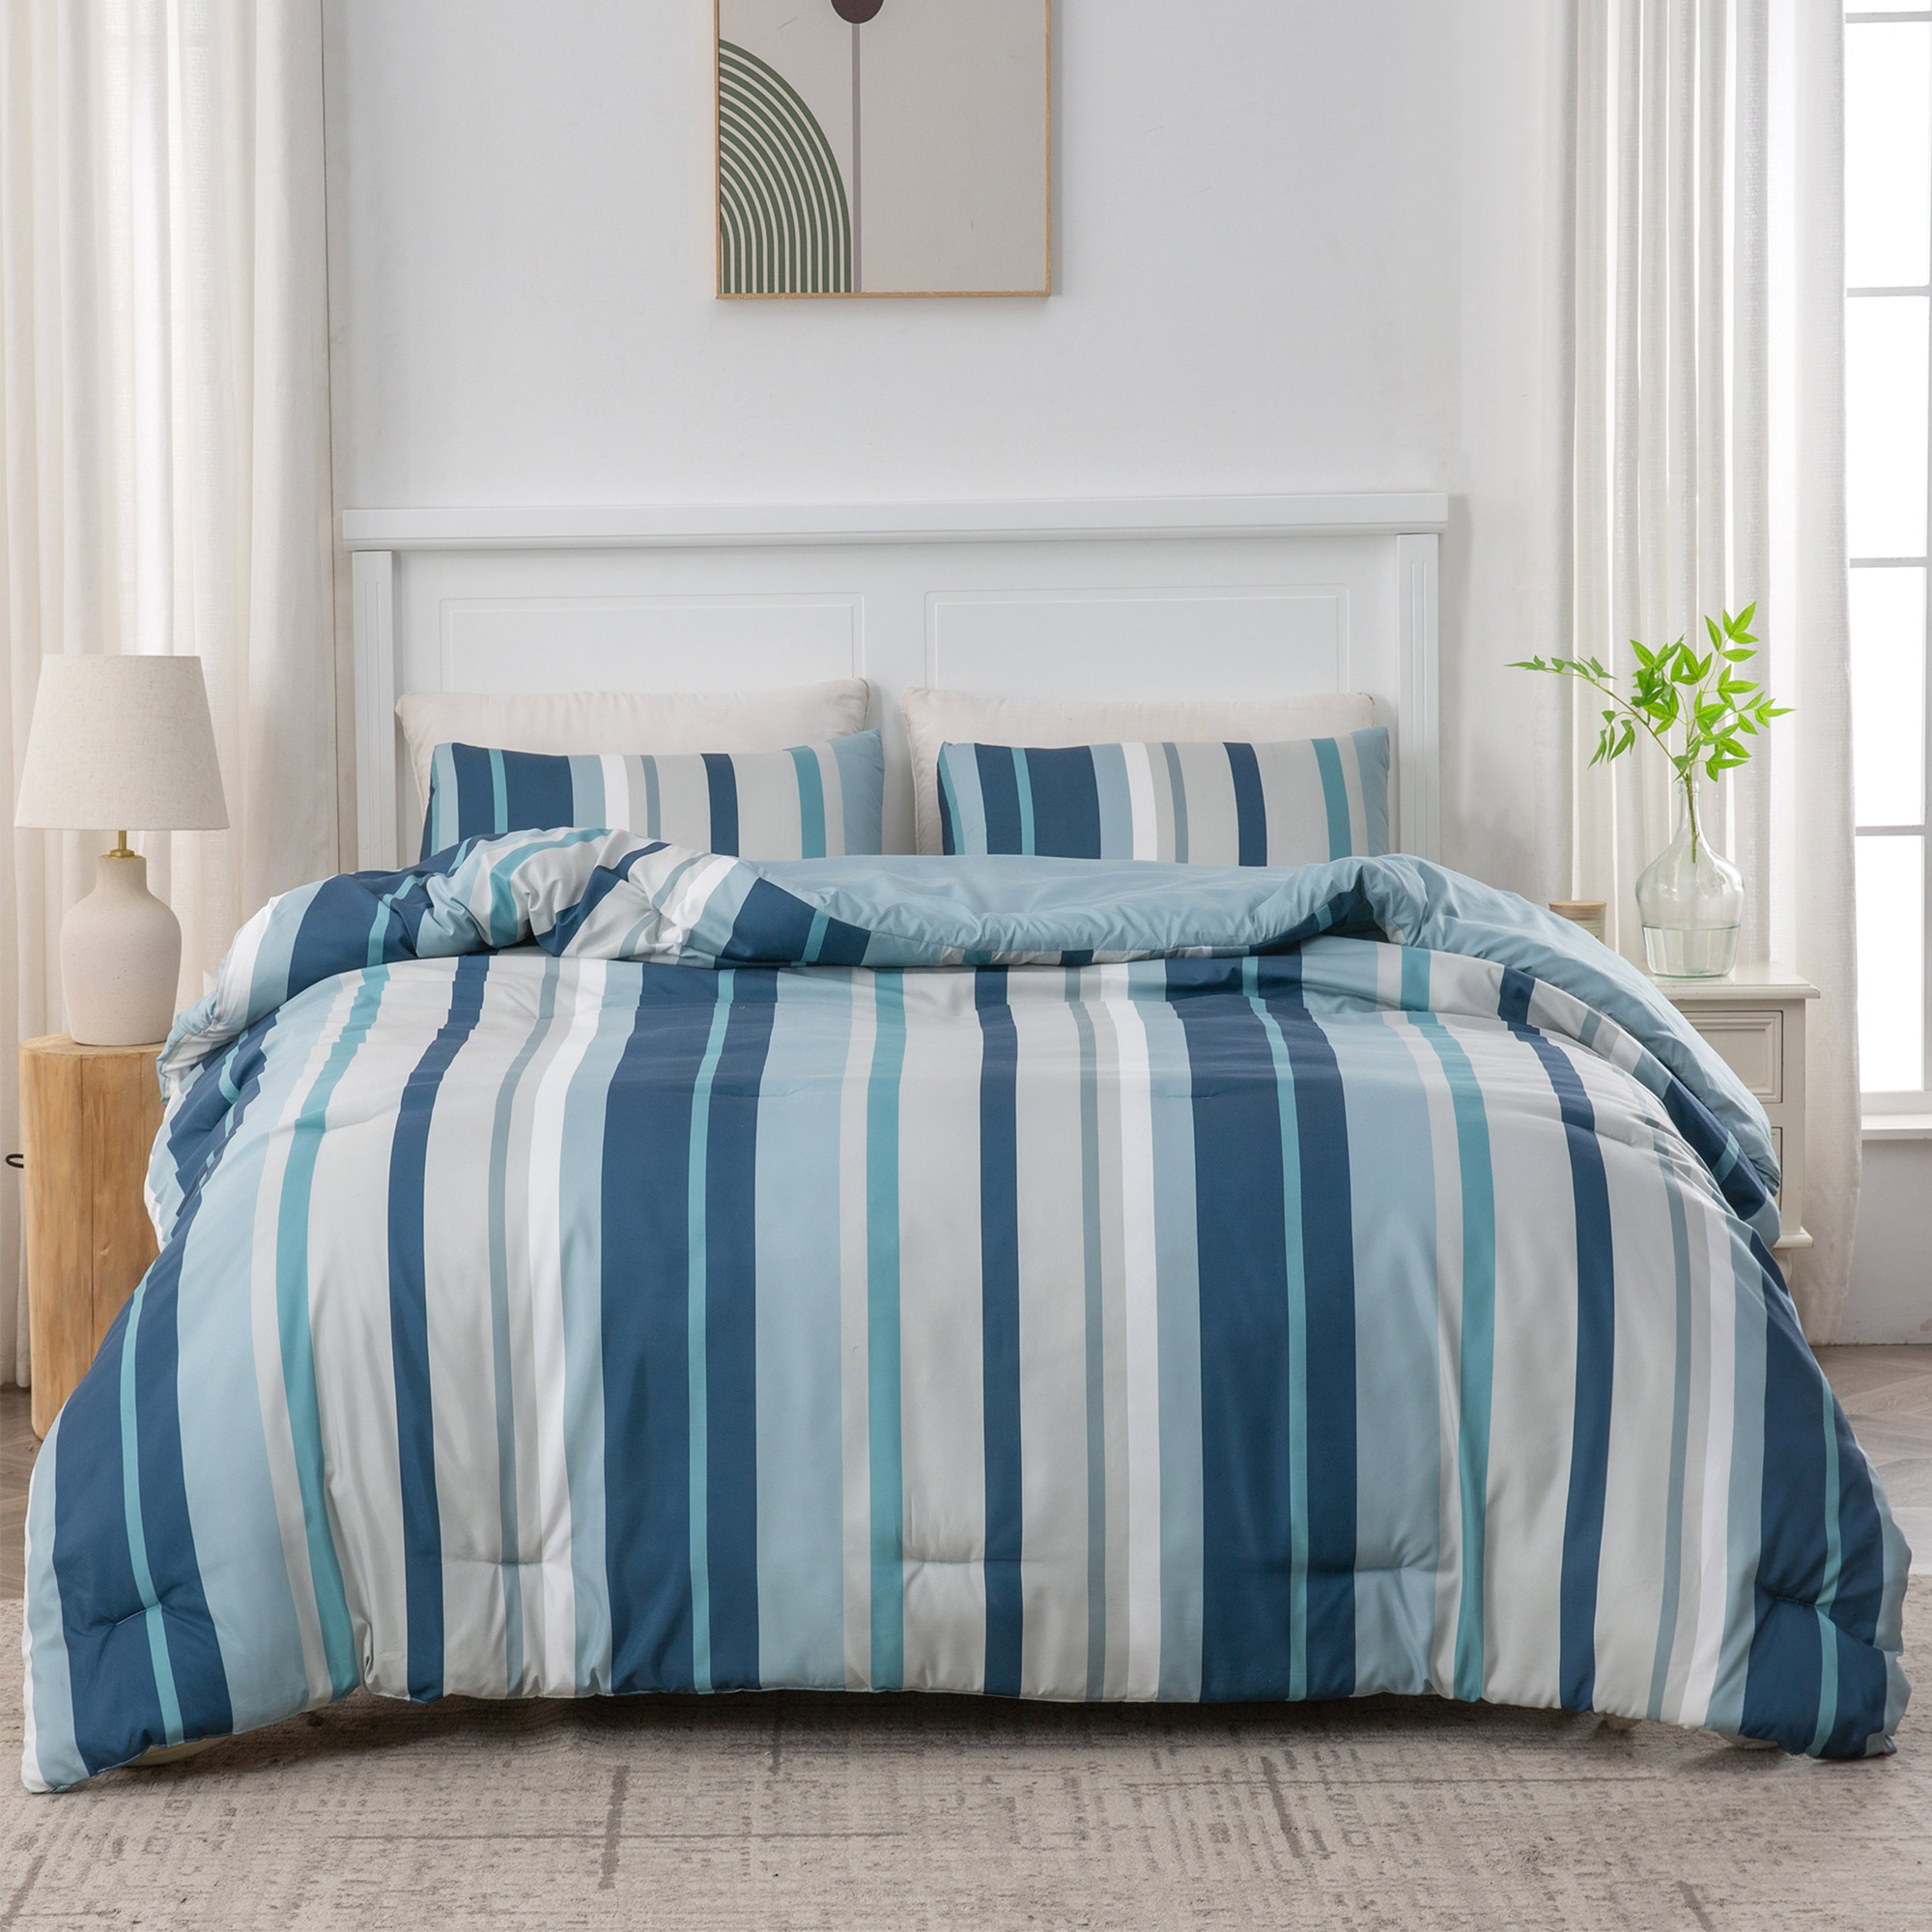 Printed Stripe Microfiber Comforter Set - All-Season Warmth, Blue - King